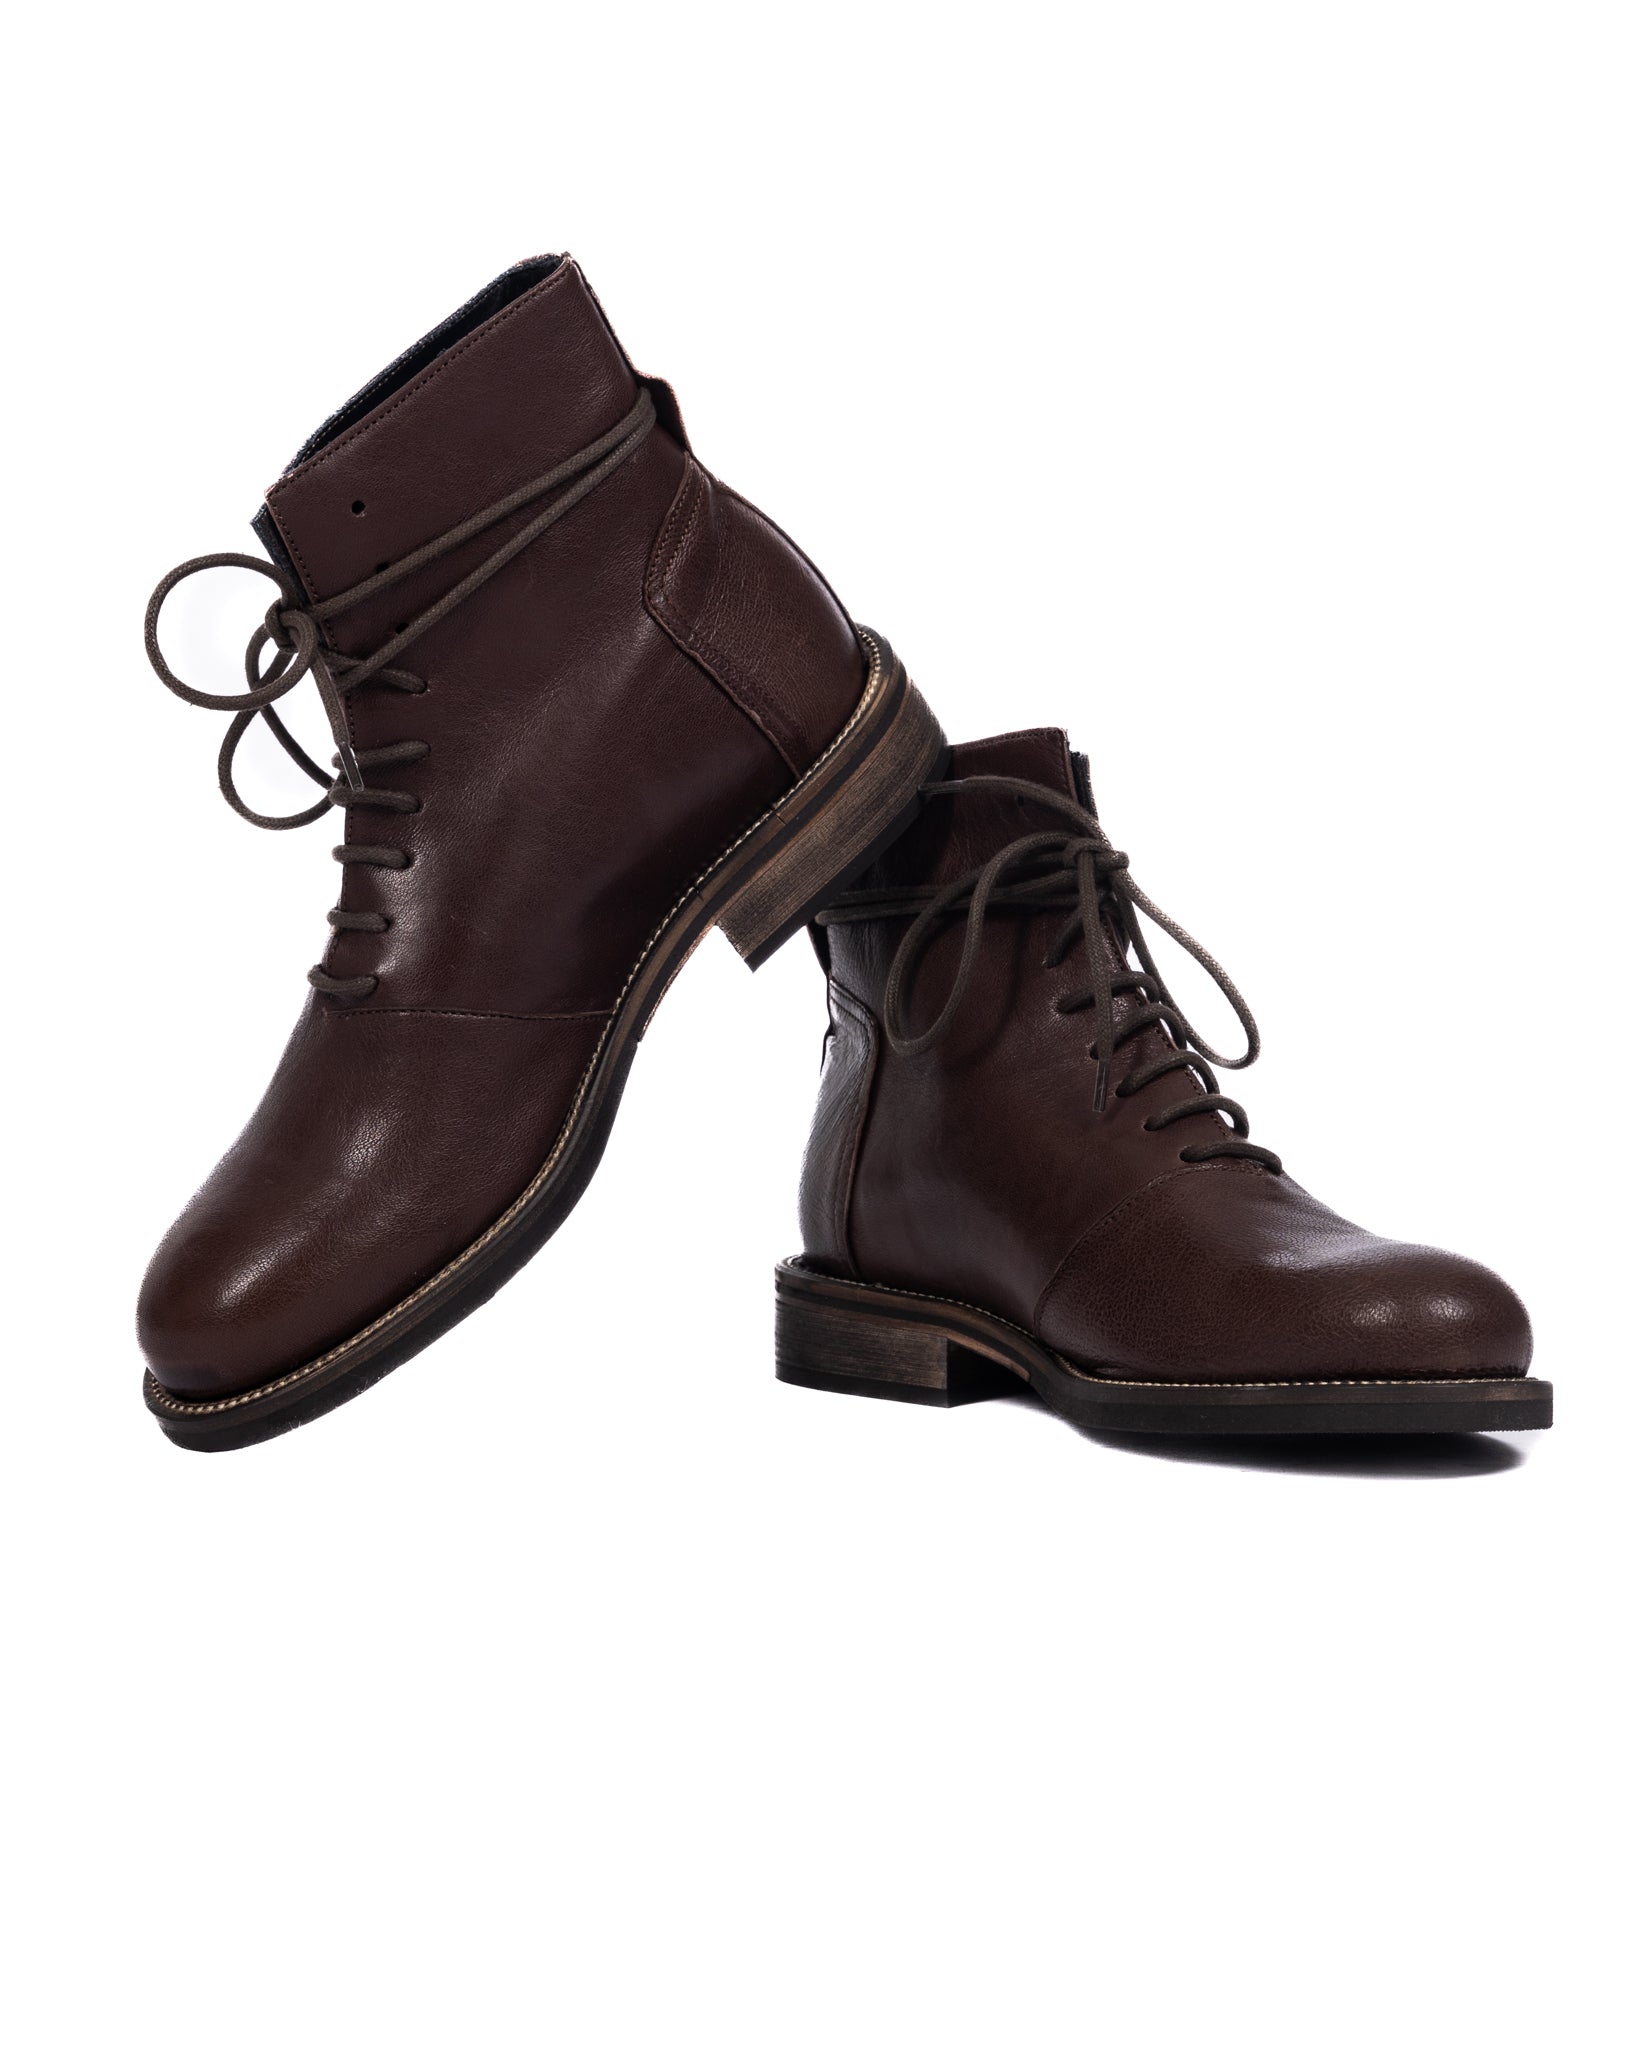 Houston - dark brown leather boot